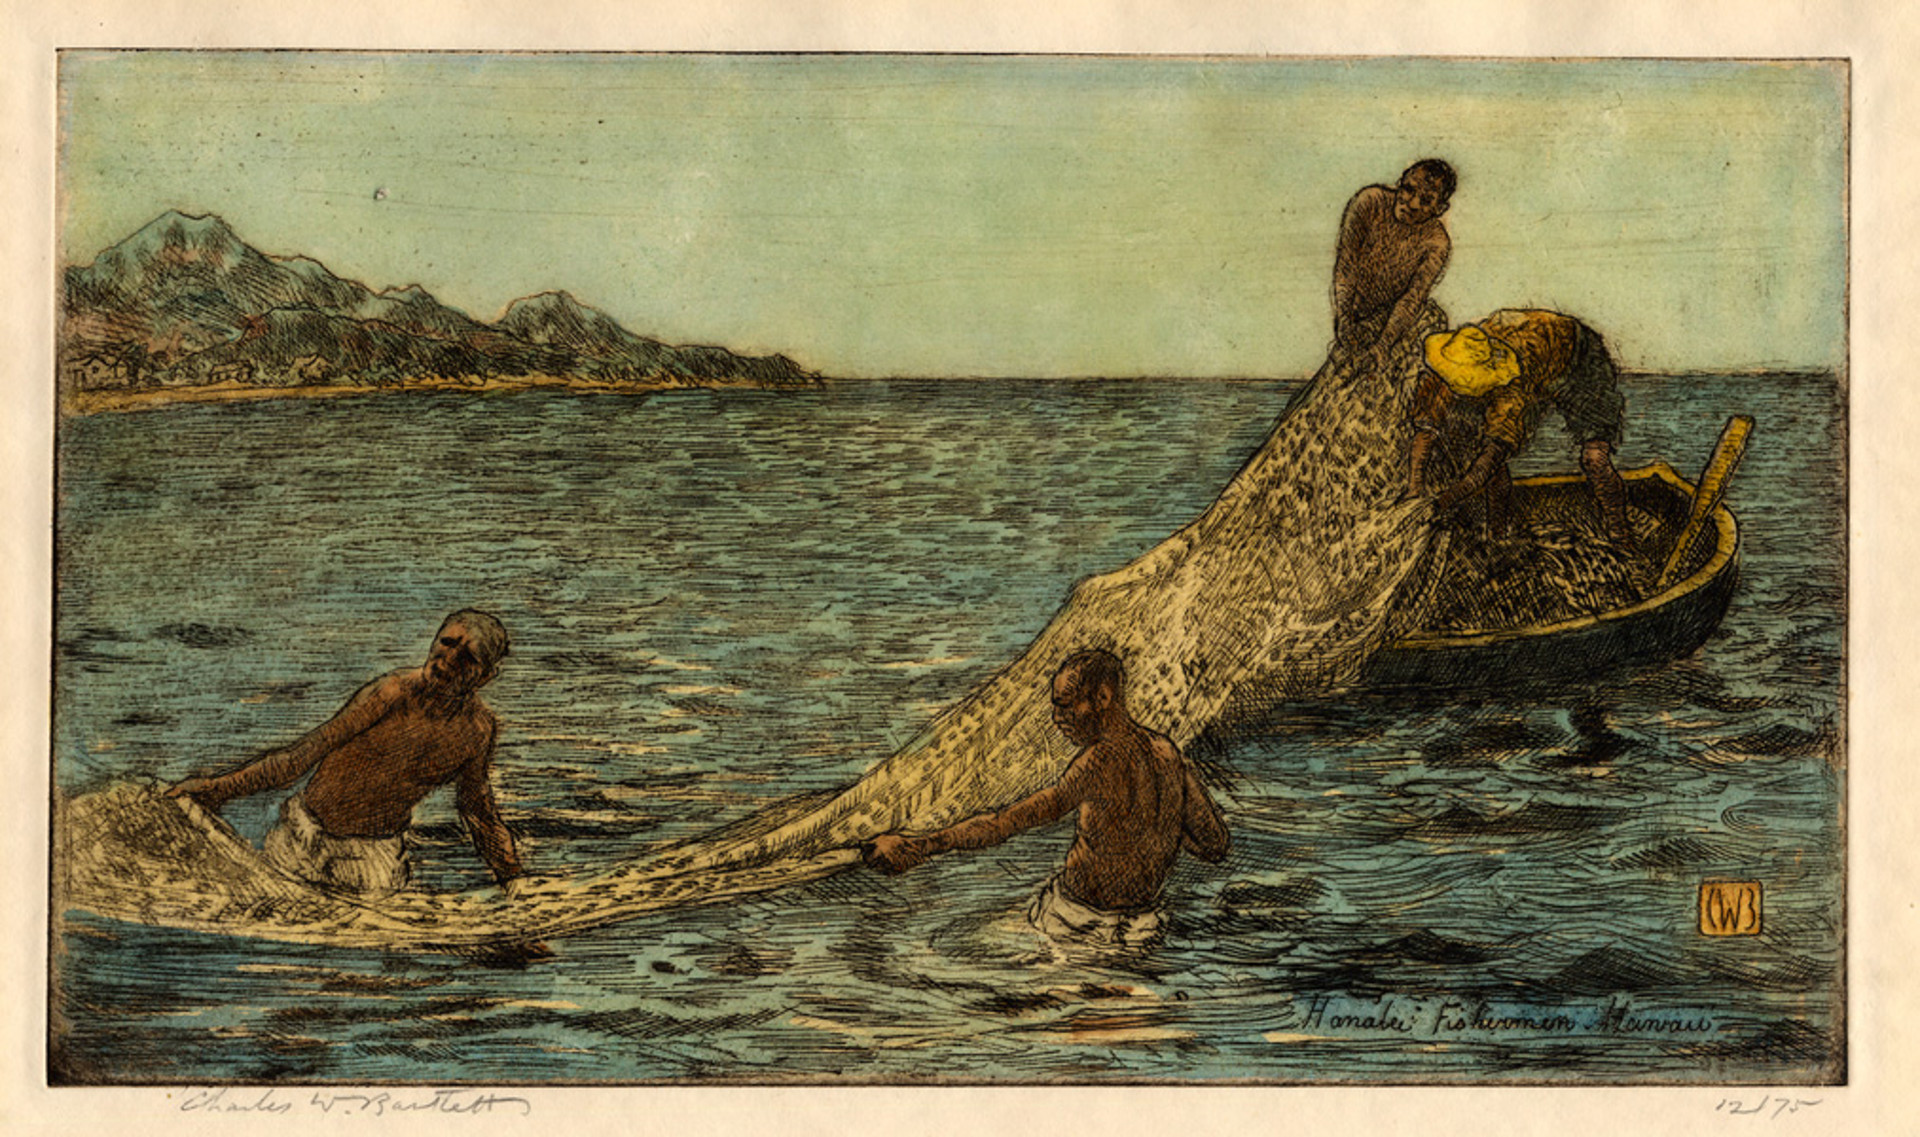 Hanalei Fishermen by Charles Bartlett